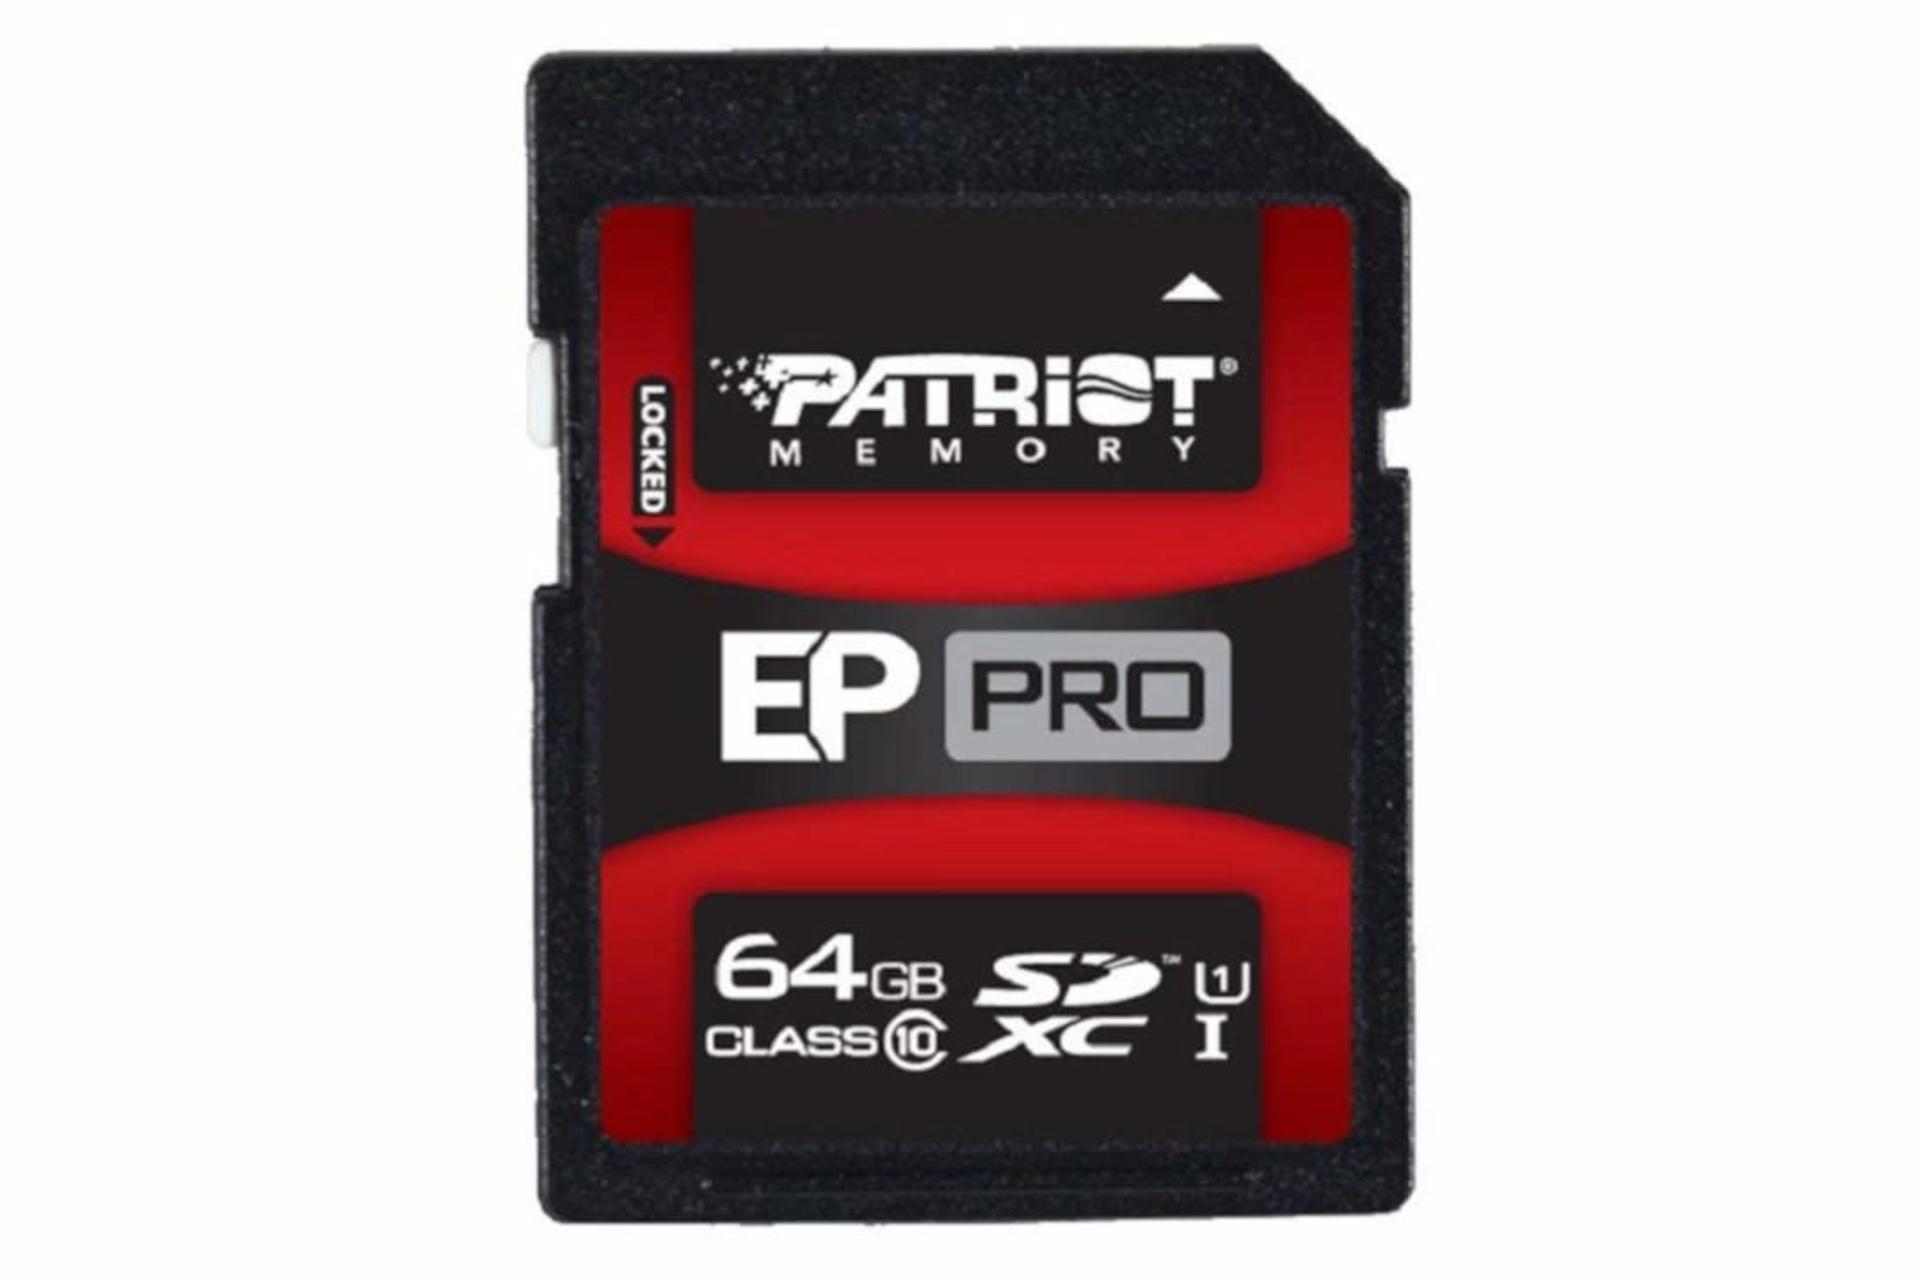 Patriot EP Pro SDXC Class 10 UHS-I U1 64GB